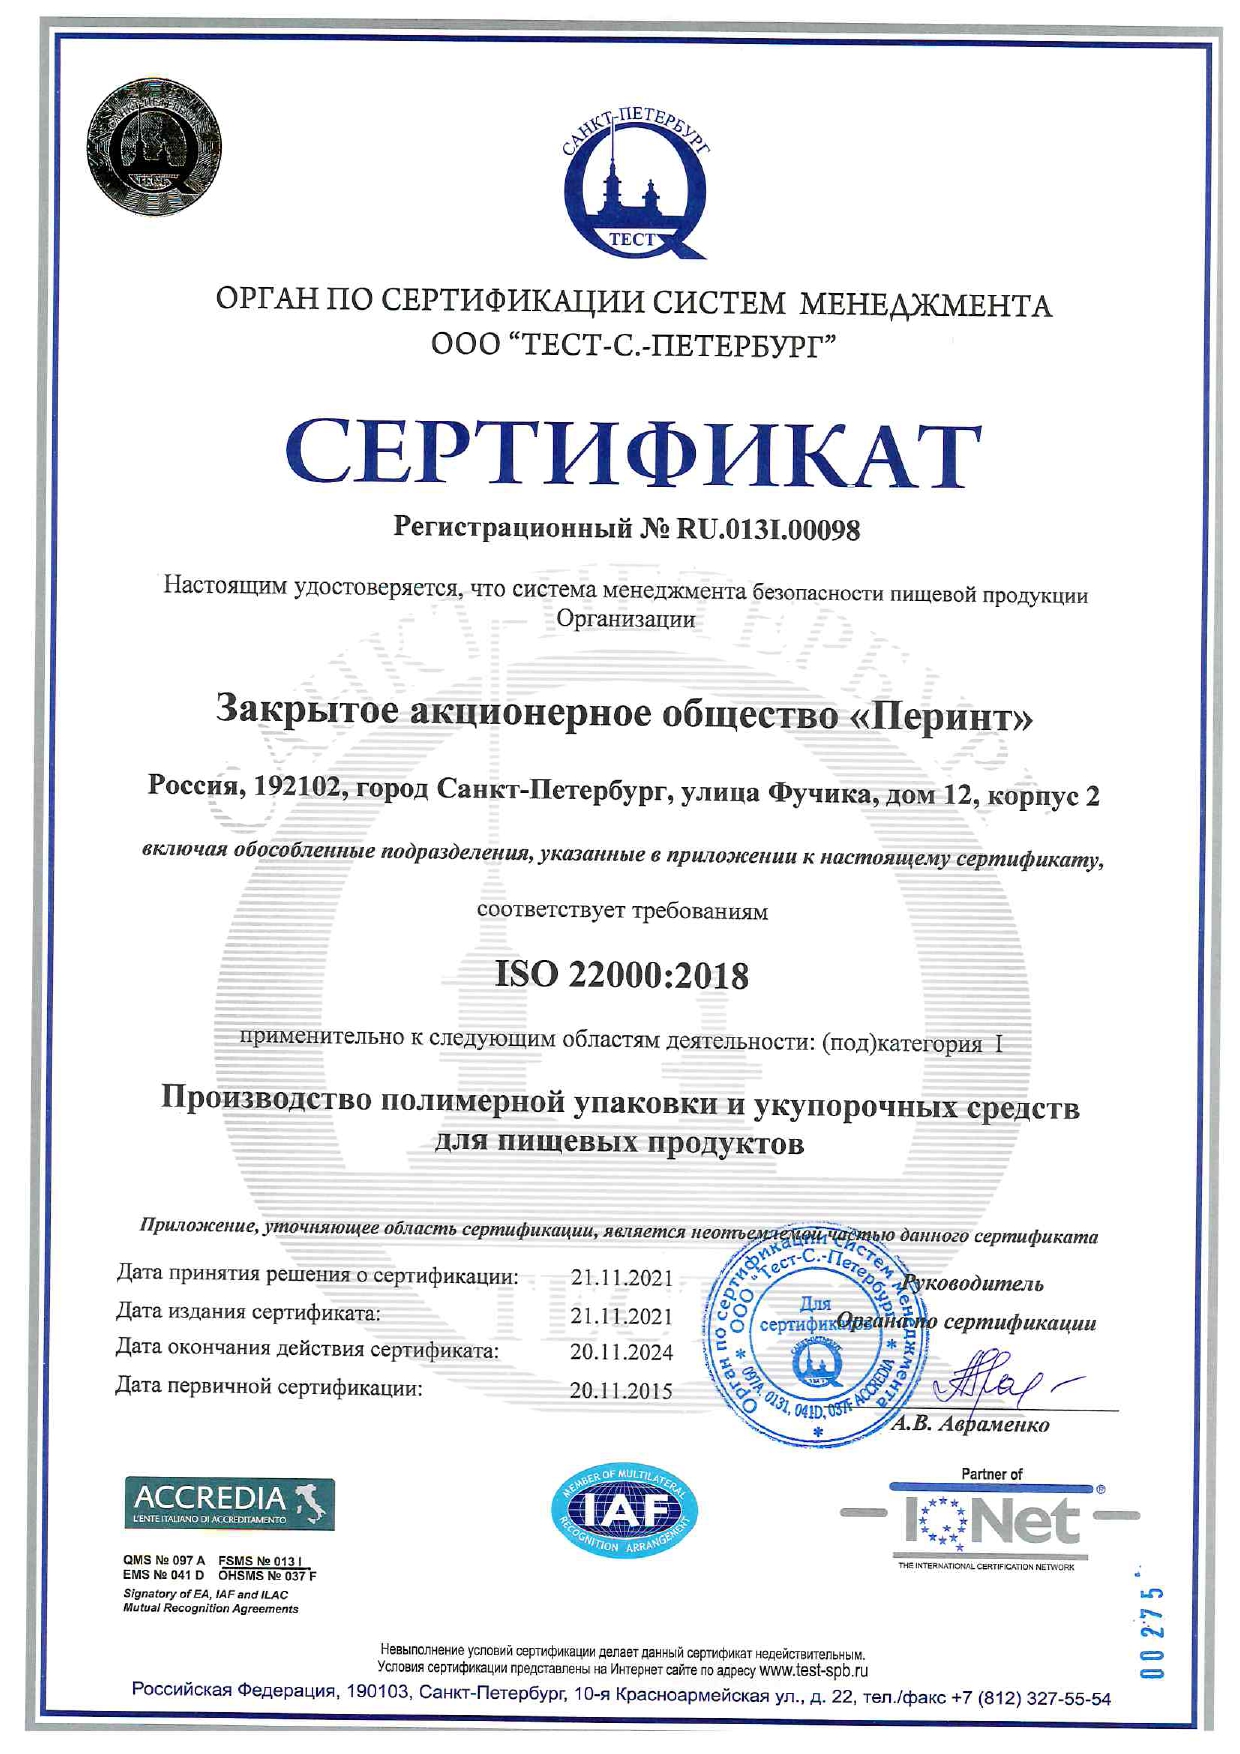 Сертификат соответствия СМ БПП требованиям ISO 220002018 ACCREDIA_page_1_2022